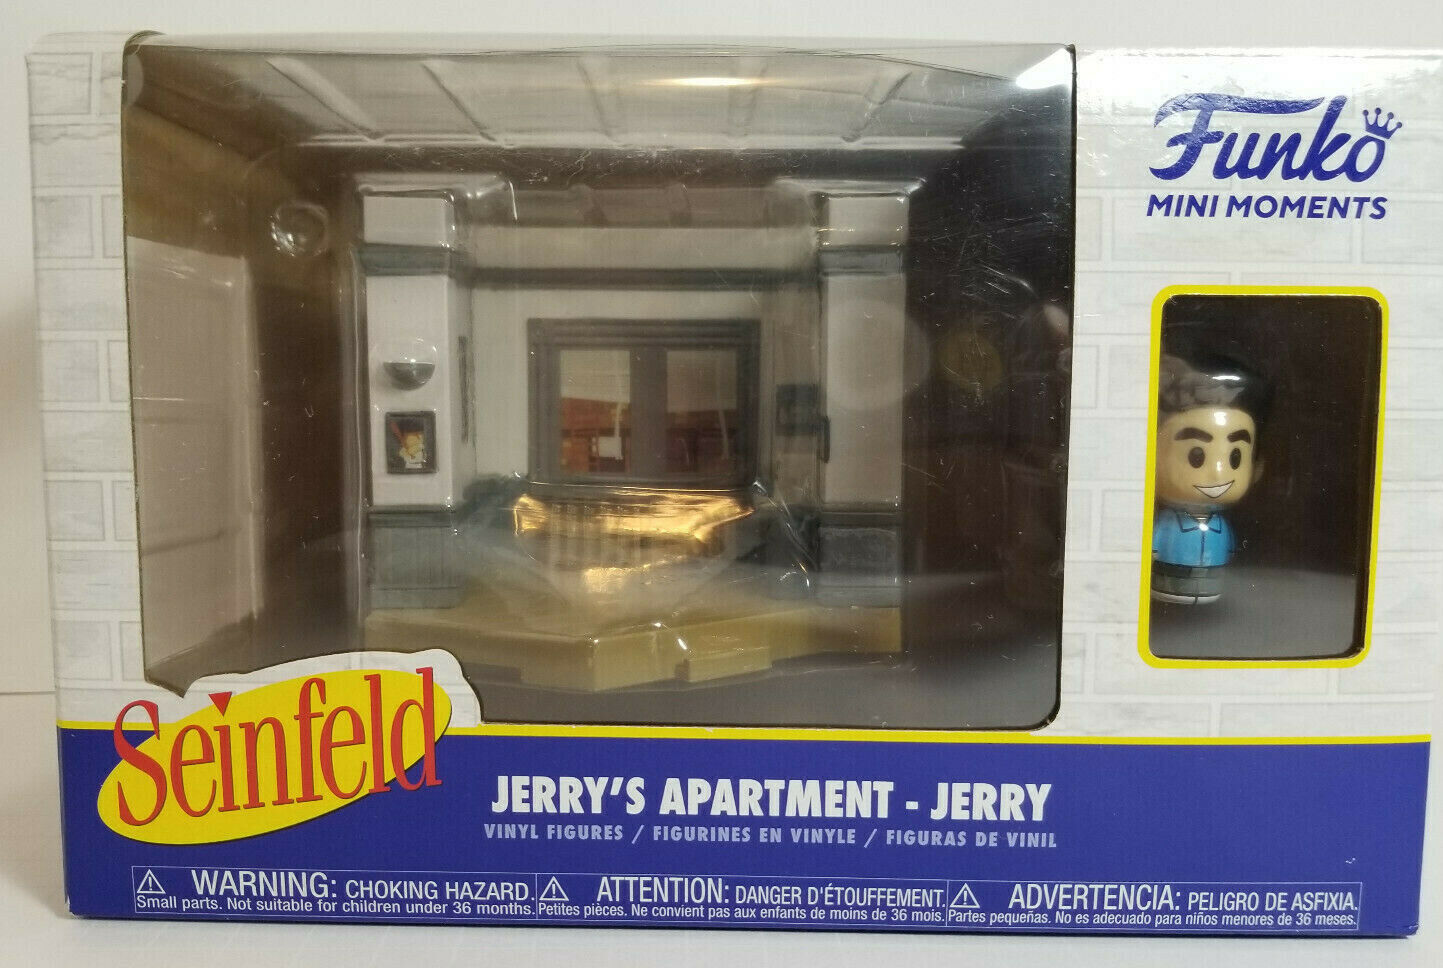 Jerry’s Apartment, Jerry, Seinfeld Funko Mini Moments Diorama